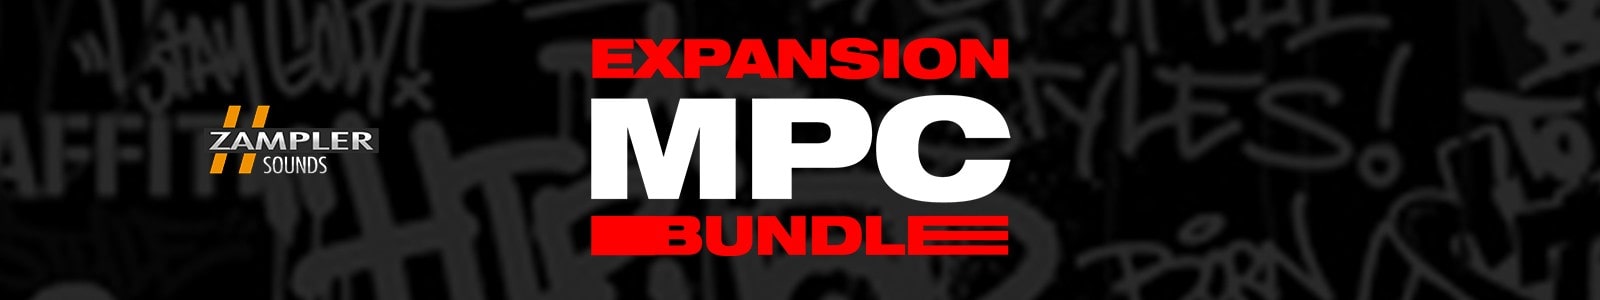 MPC Expansion Bundle 2023 by ZamplerSounds